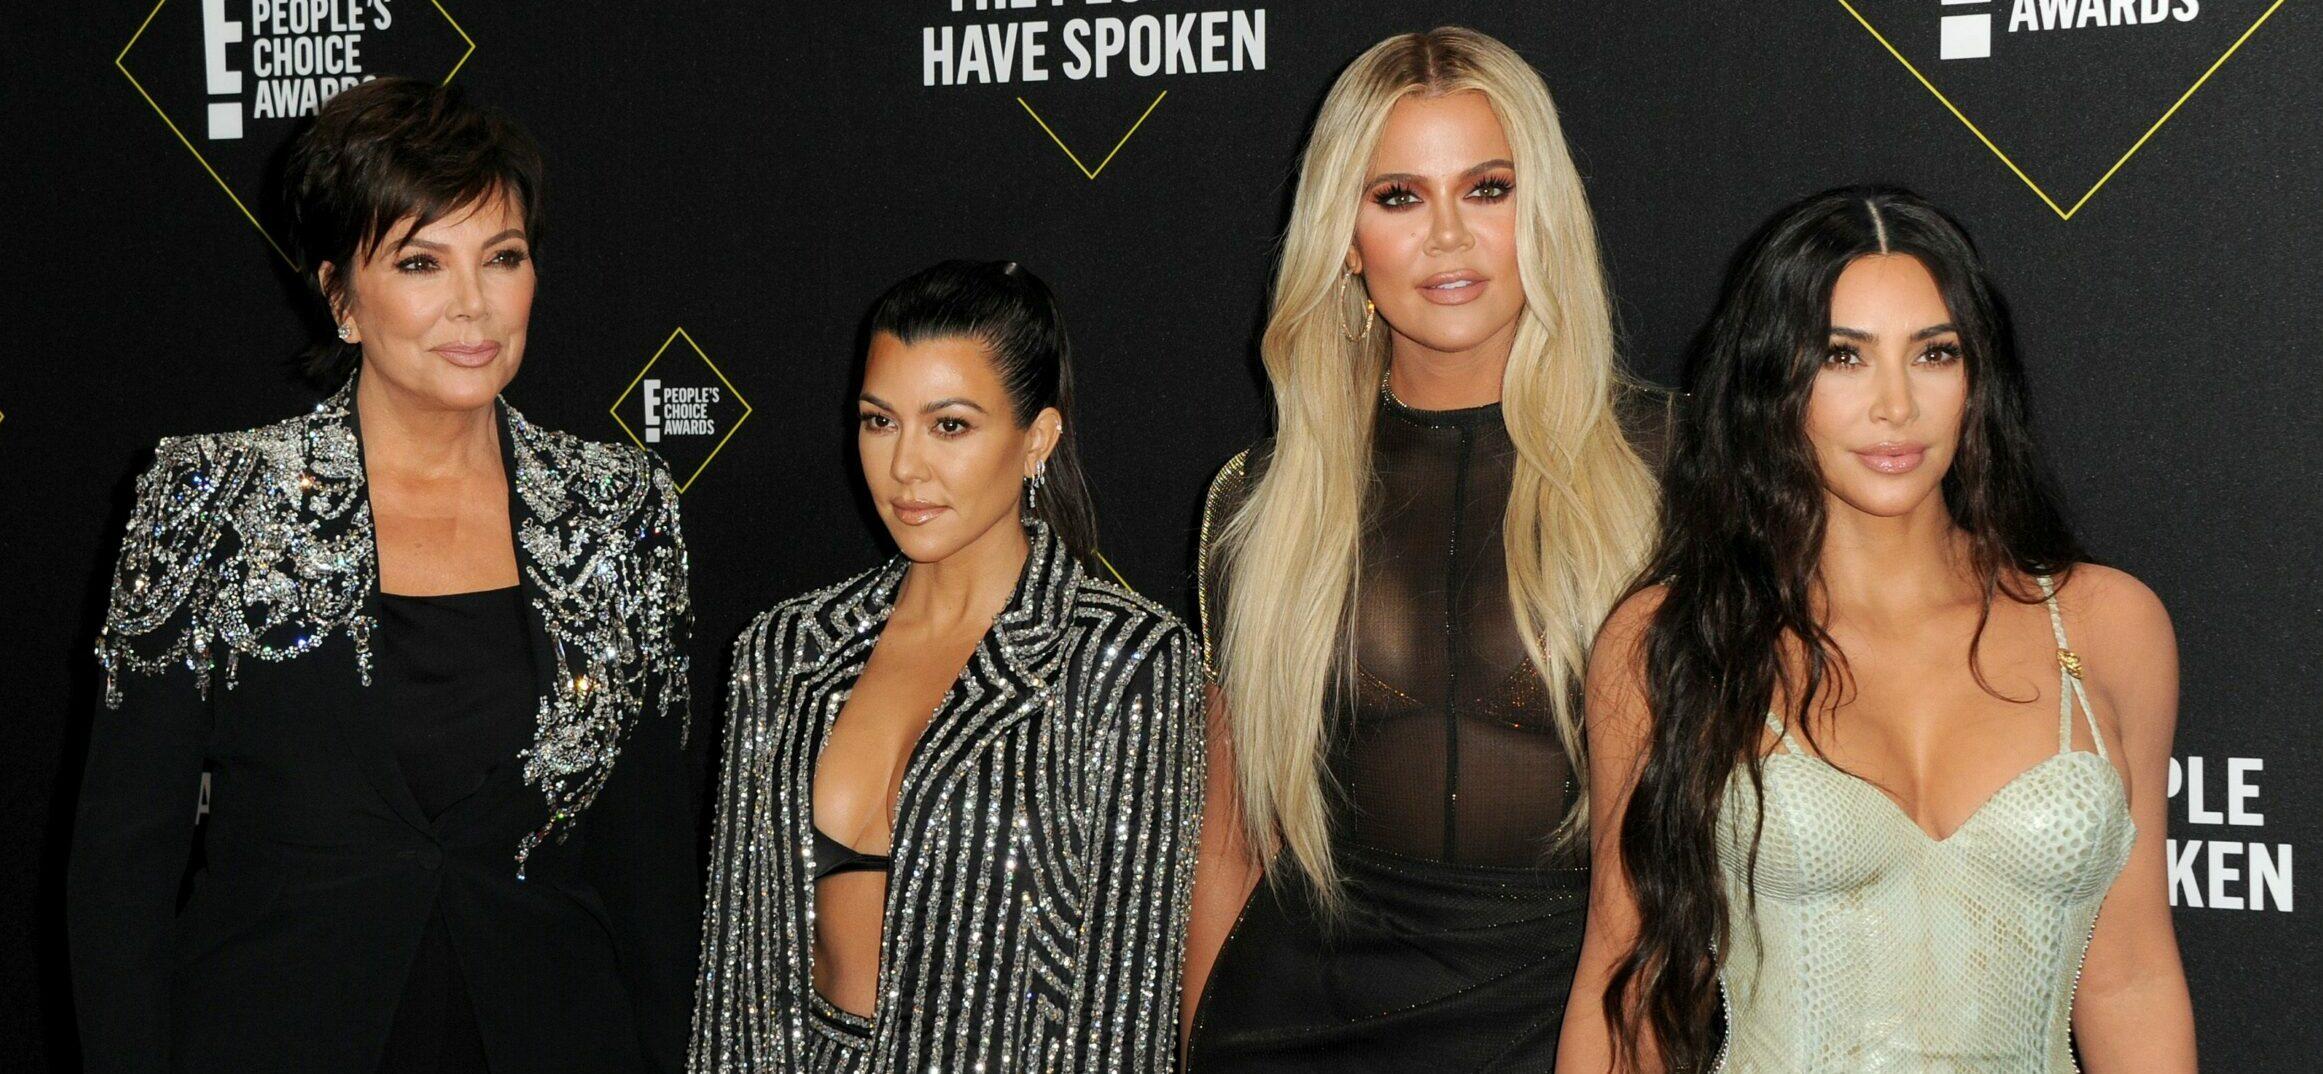 The Kardashians’ Season 3 Trailer Teases The Return Of ‘Actual Drama’ To Fans’ Delight